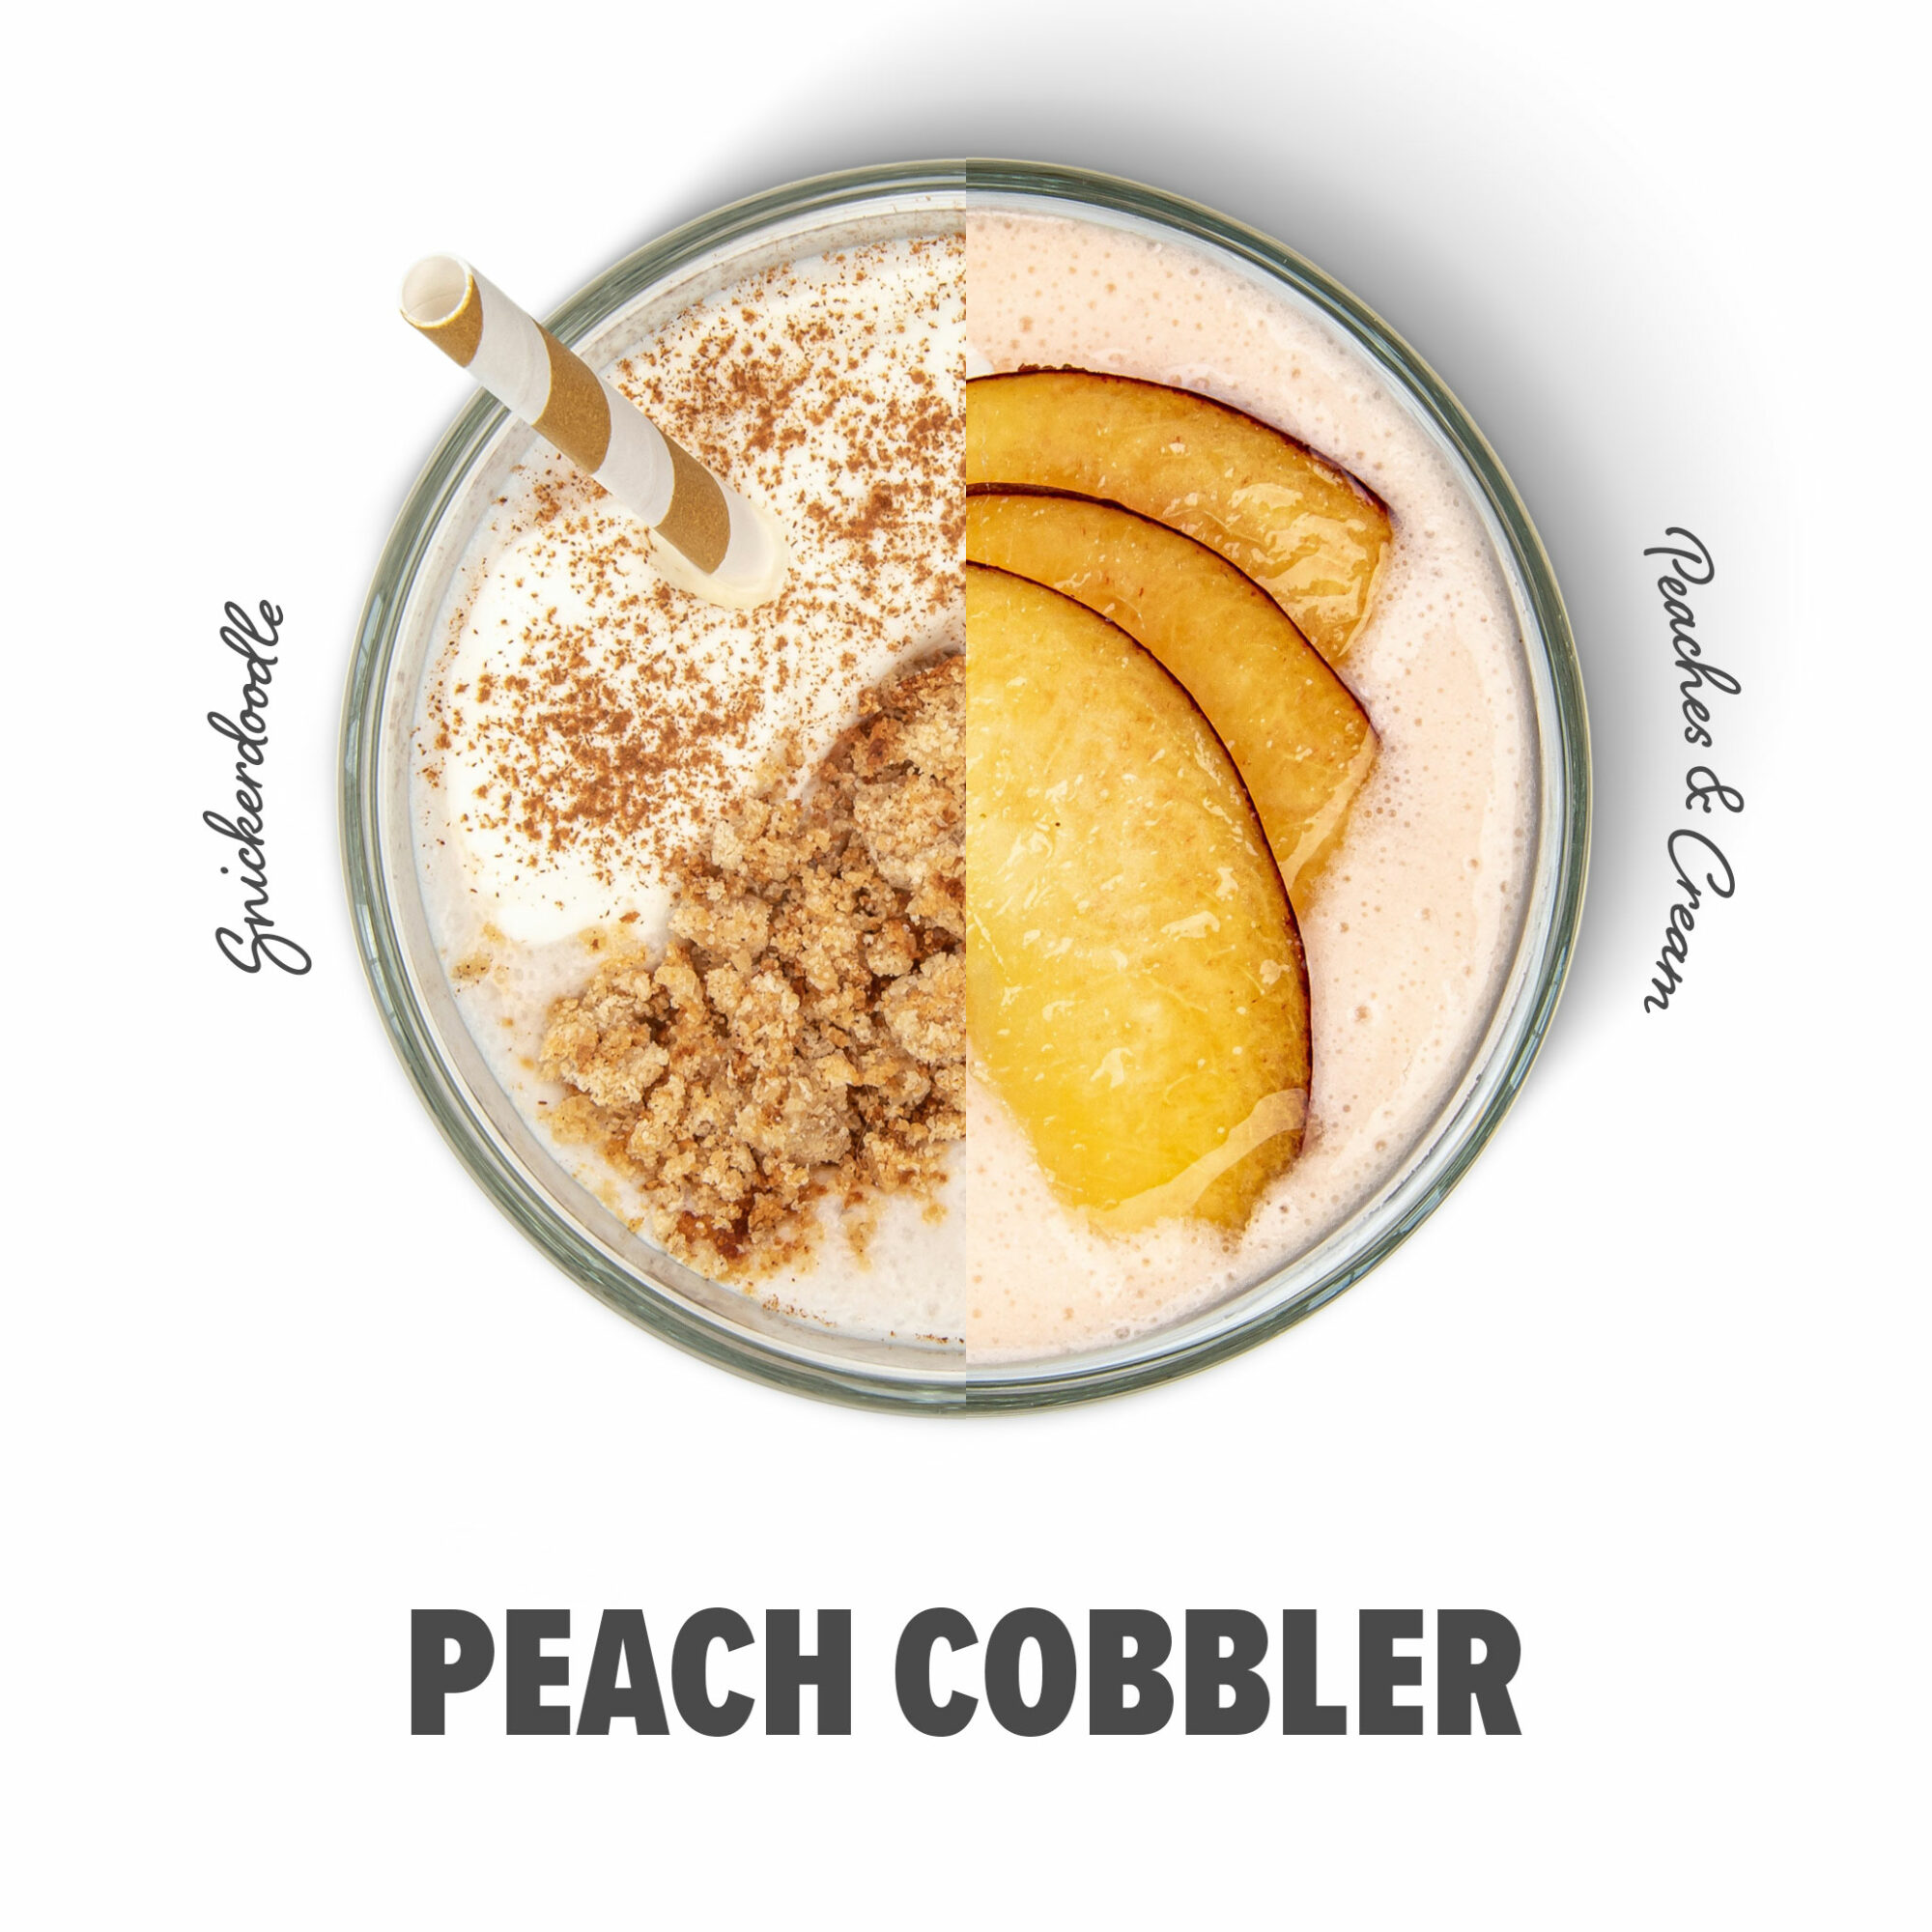 Peach Cobbler shake image